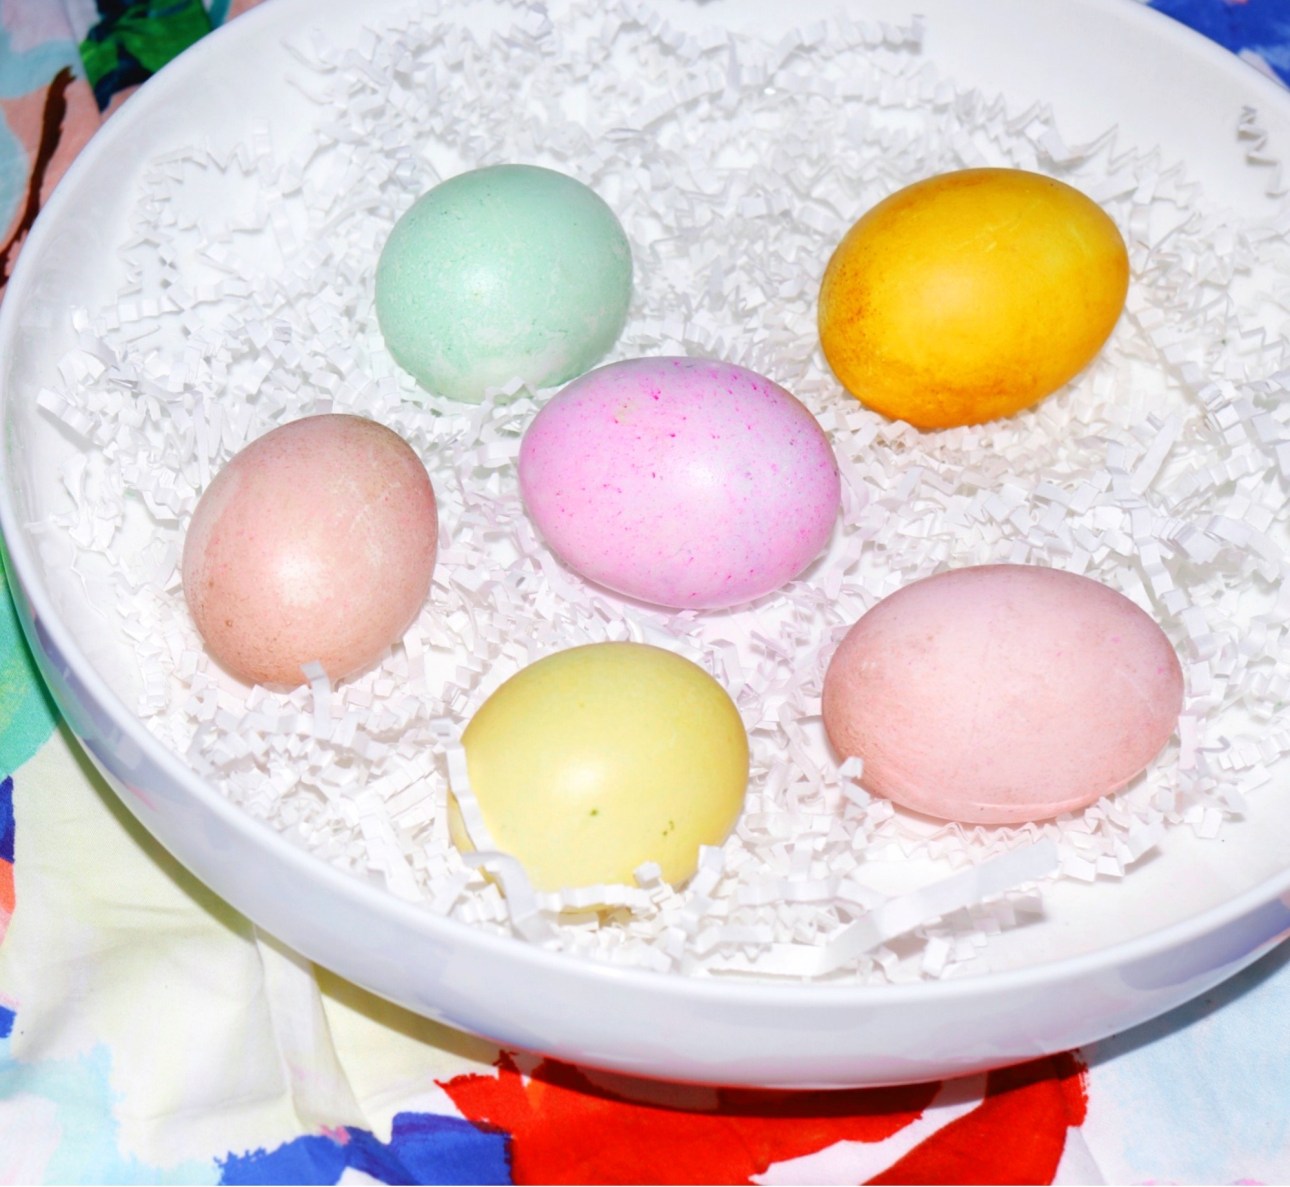 Easter Egg Hunt-Naturally Dyed Eggs